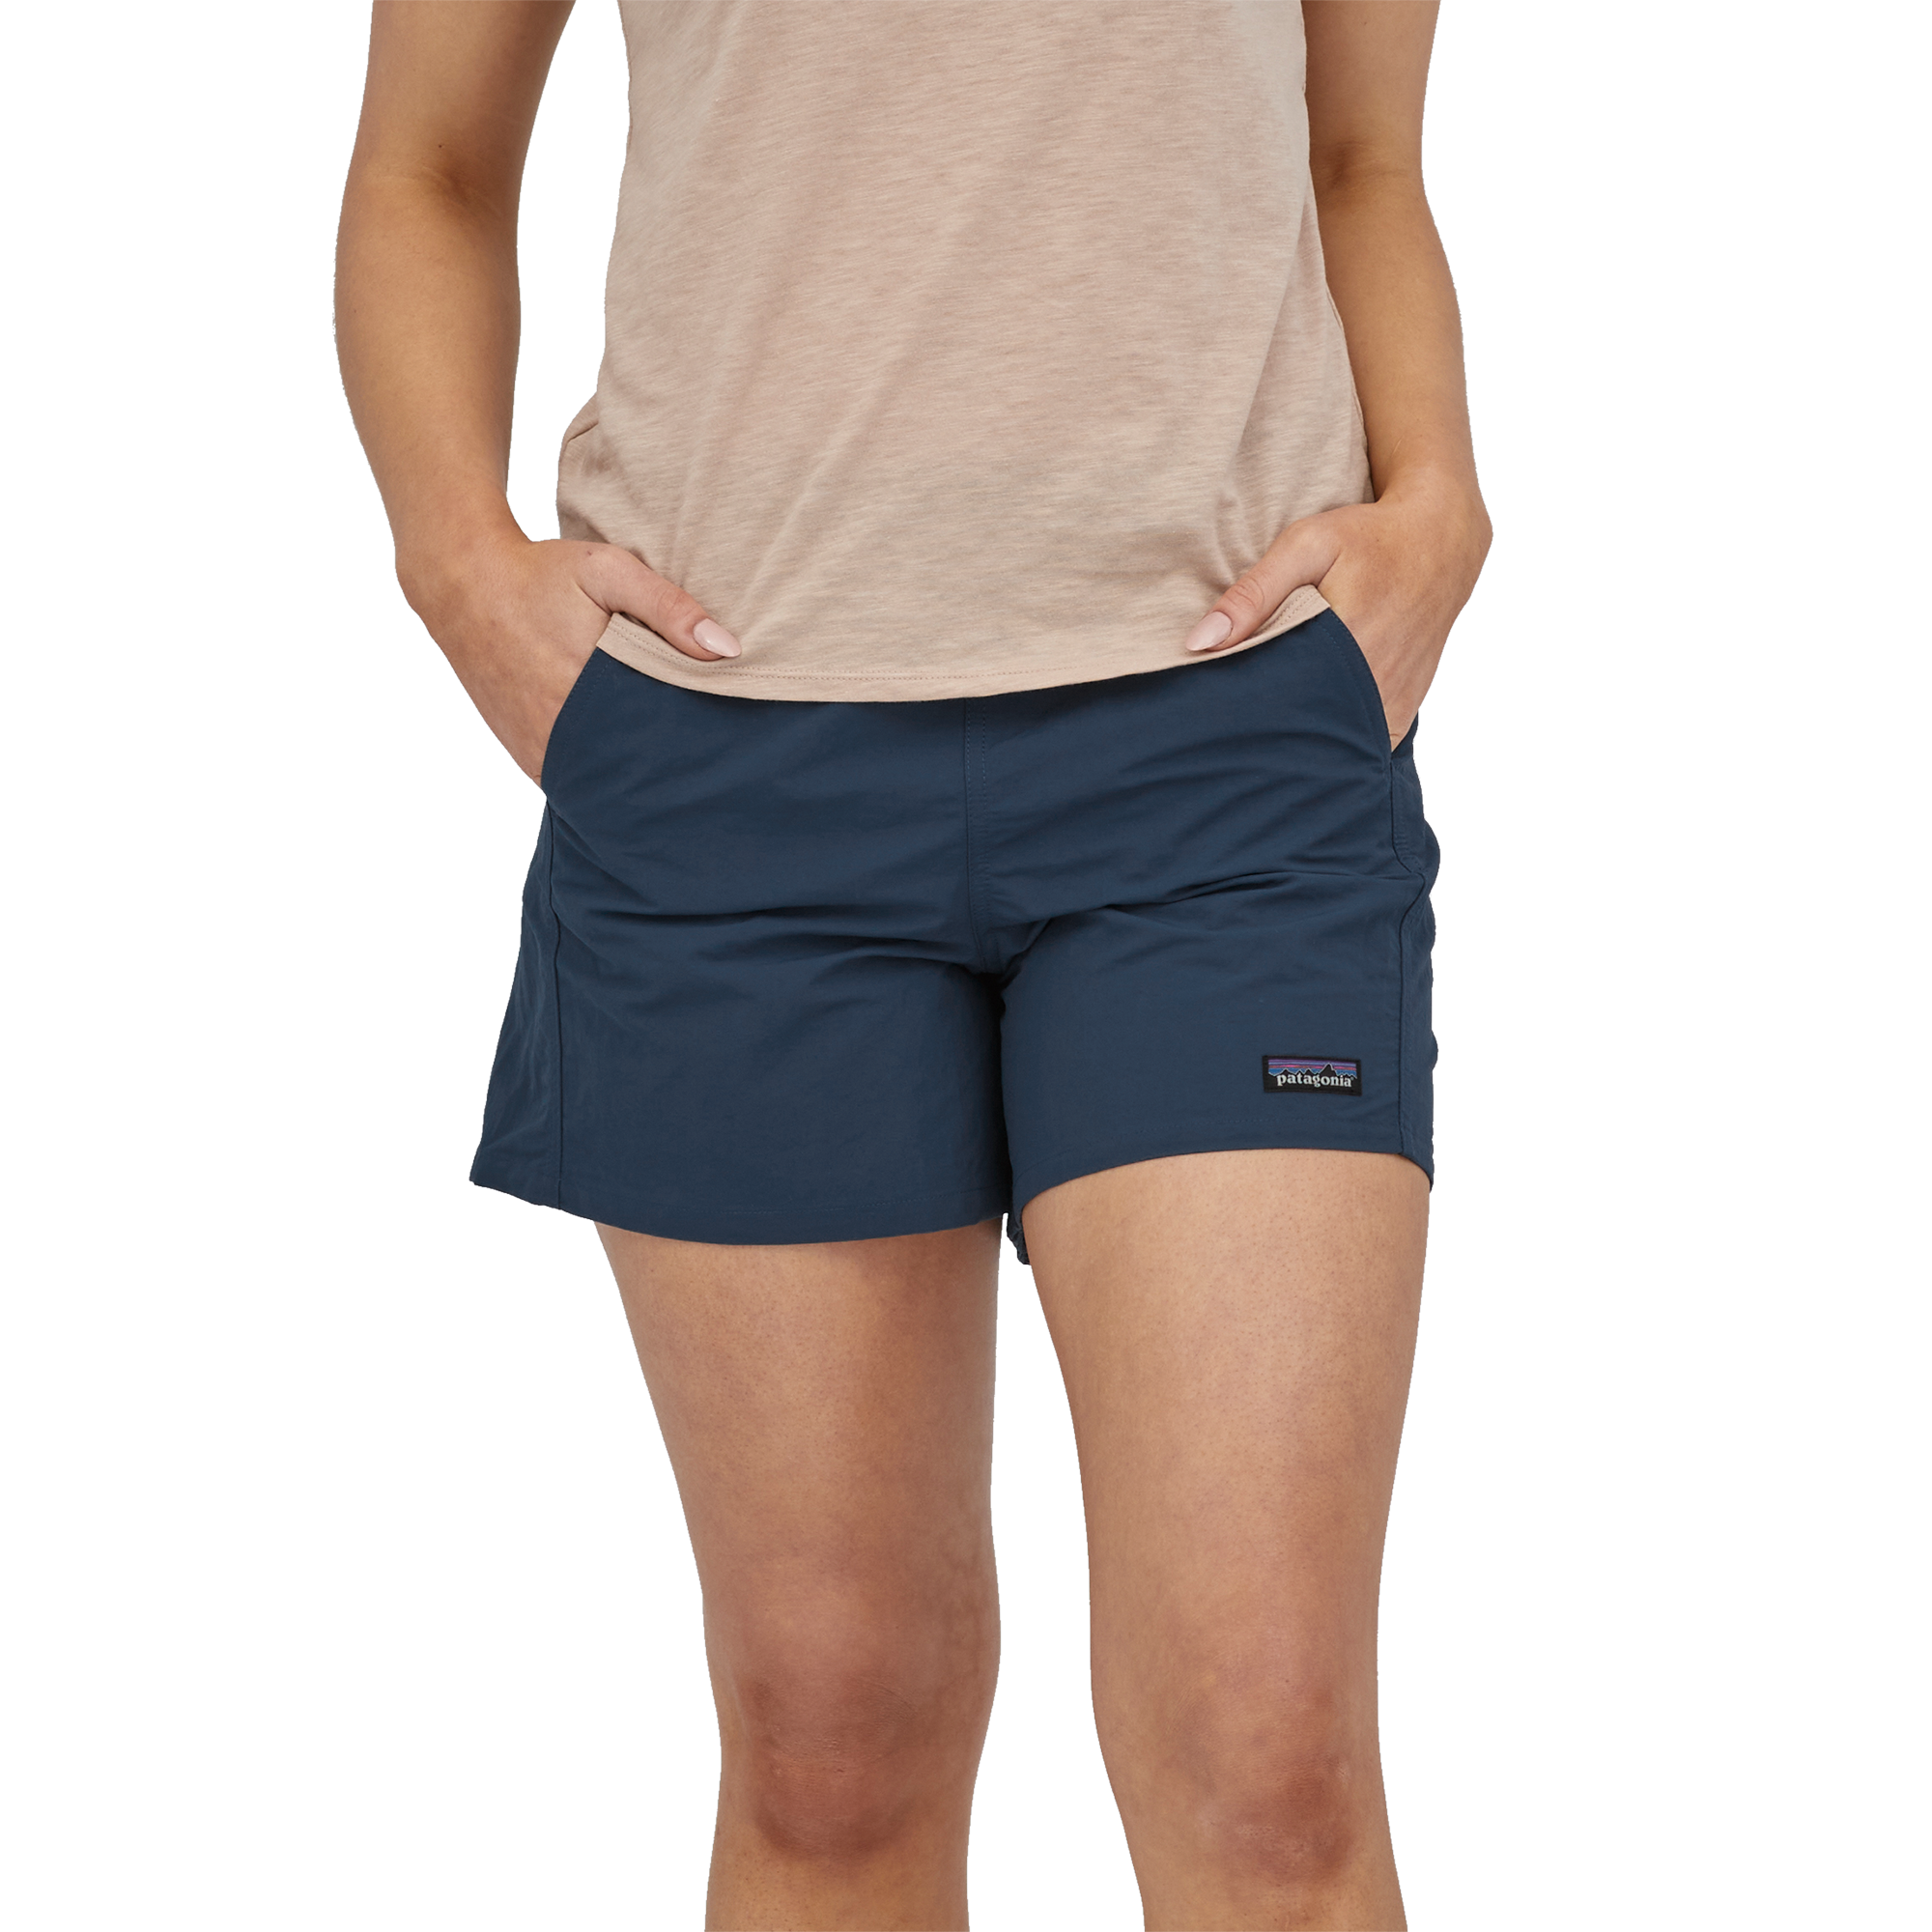 Patagonia Women's Shorts - 5" Inseam